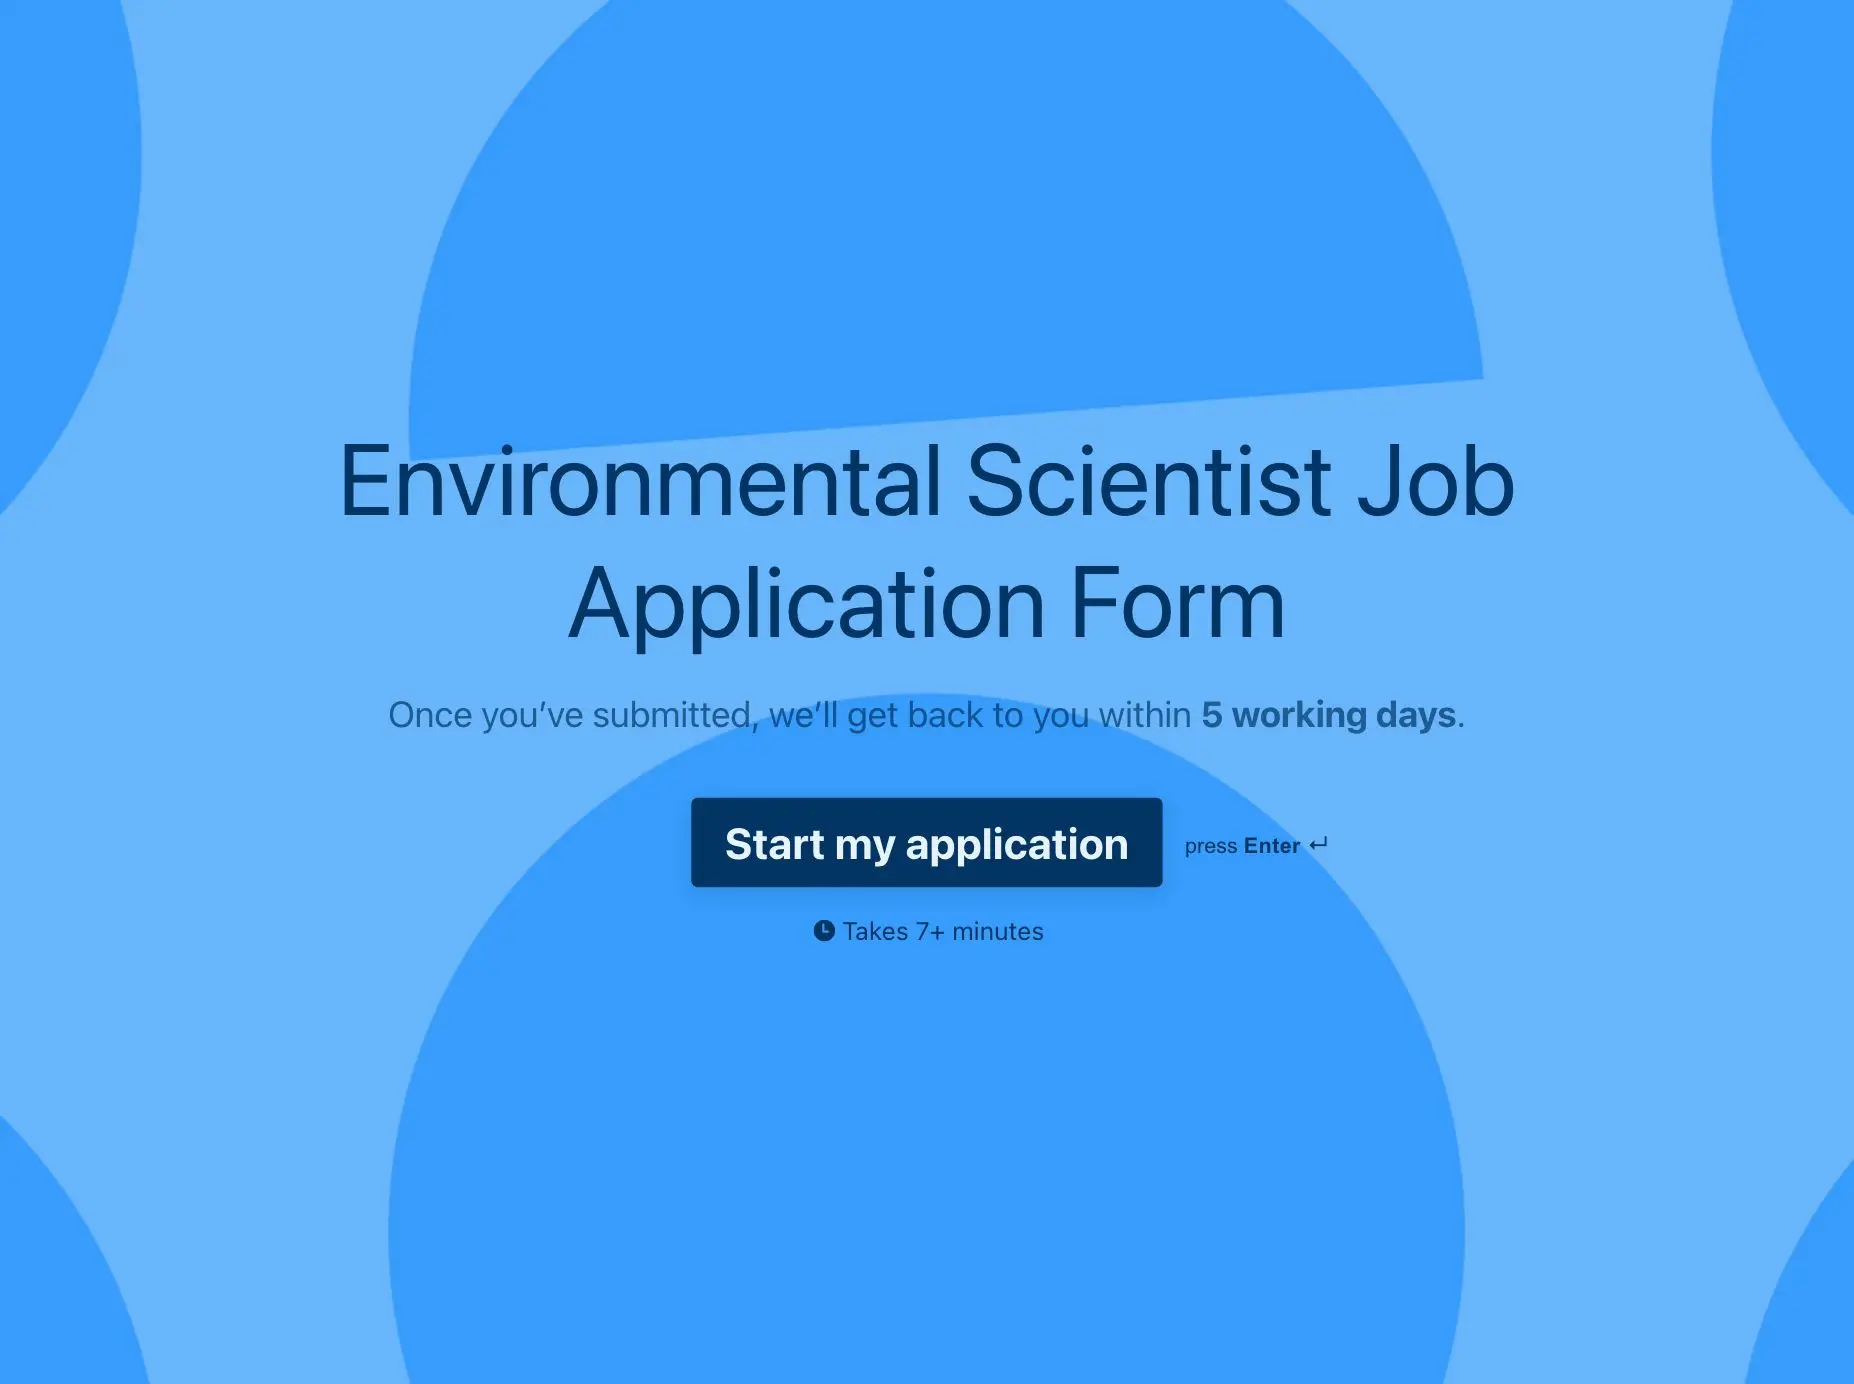 Environmental Scientist Job Application Form Template Hero